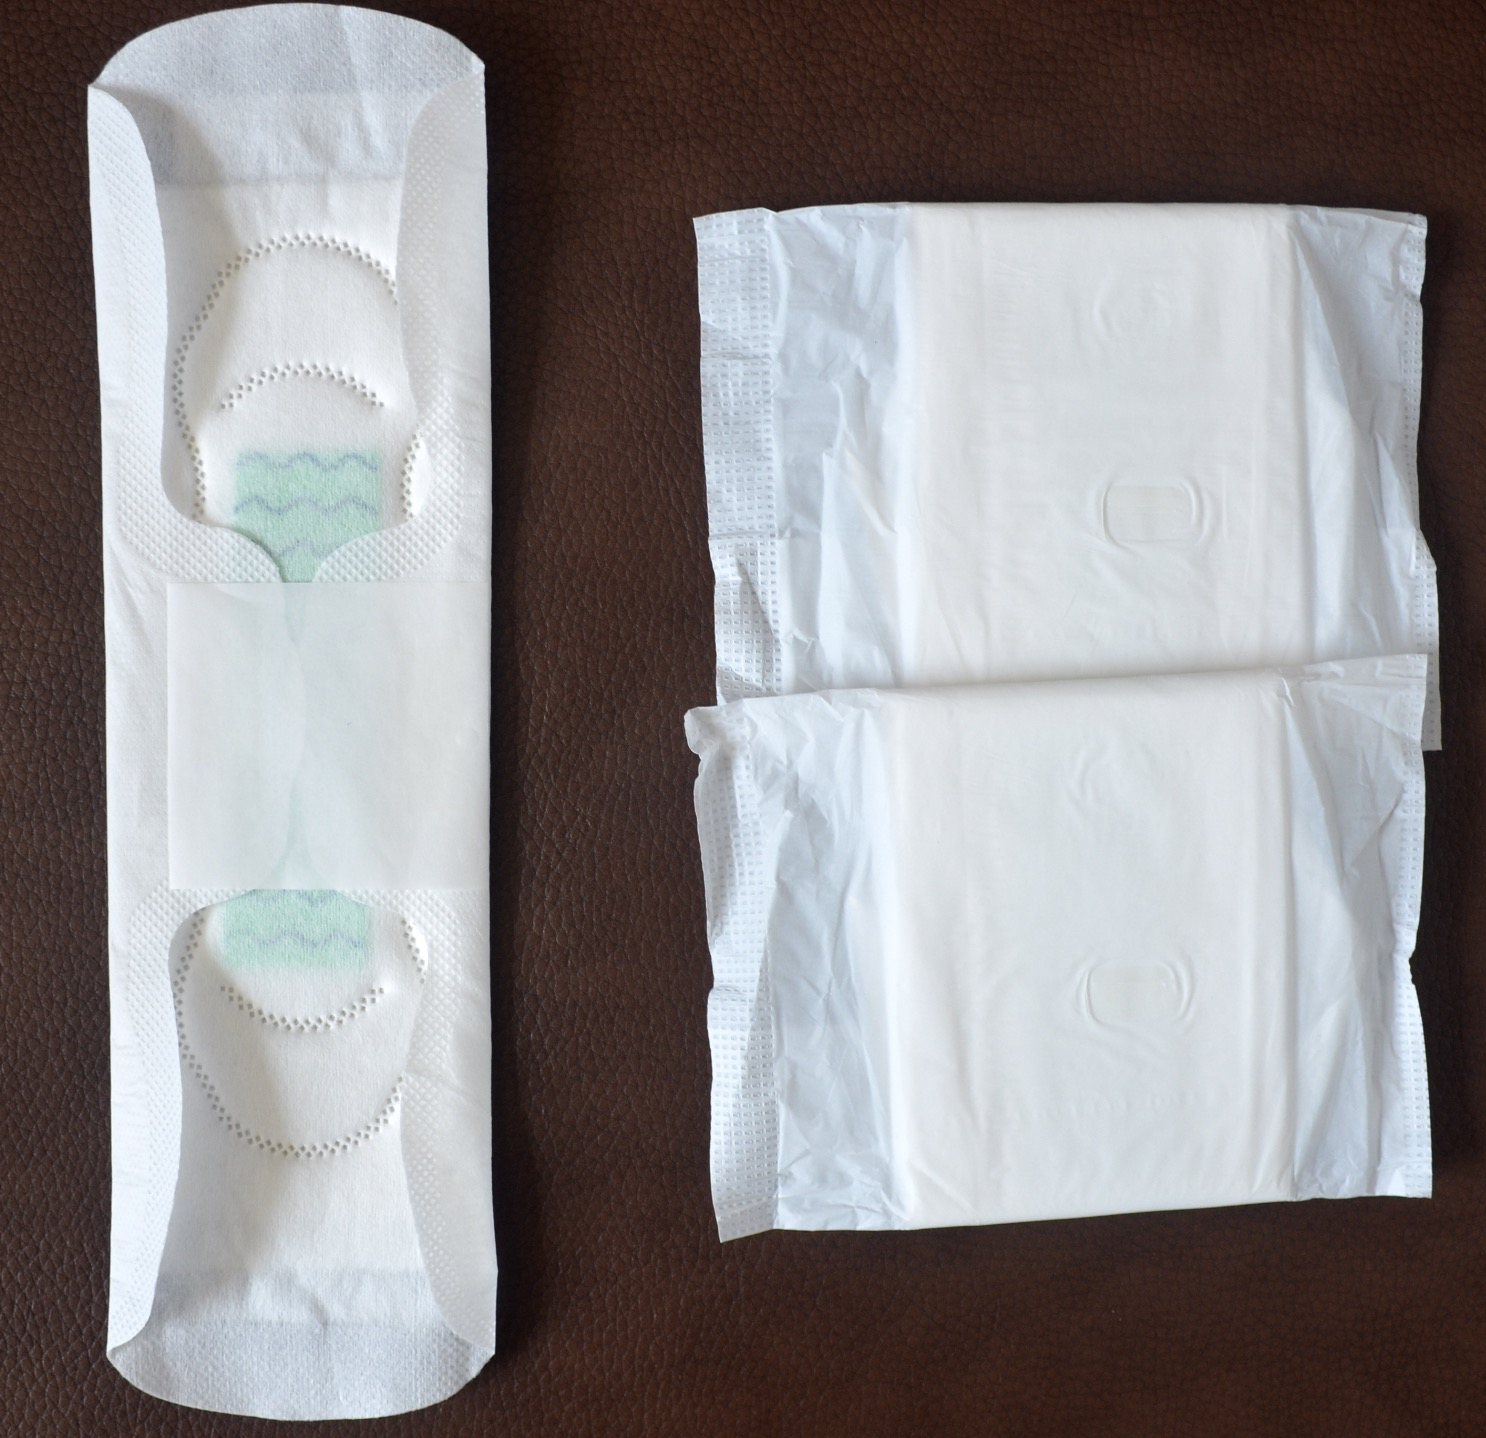 Custom brand name ladies organic cotton period pad disposable day use super sanitary napkins pad